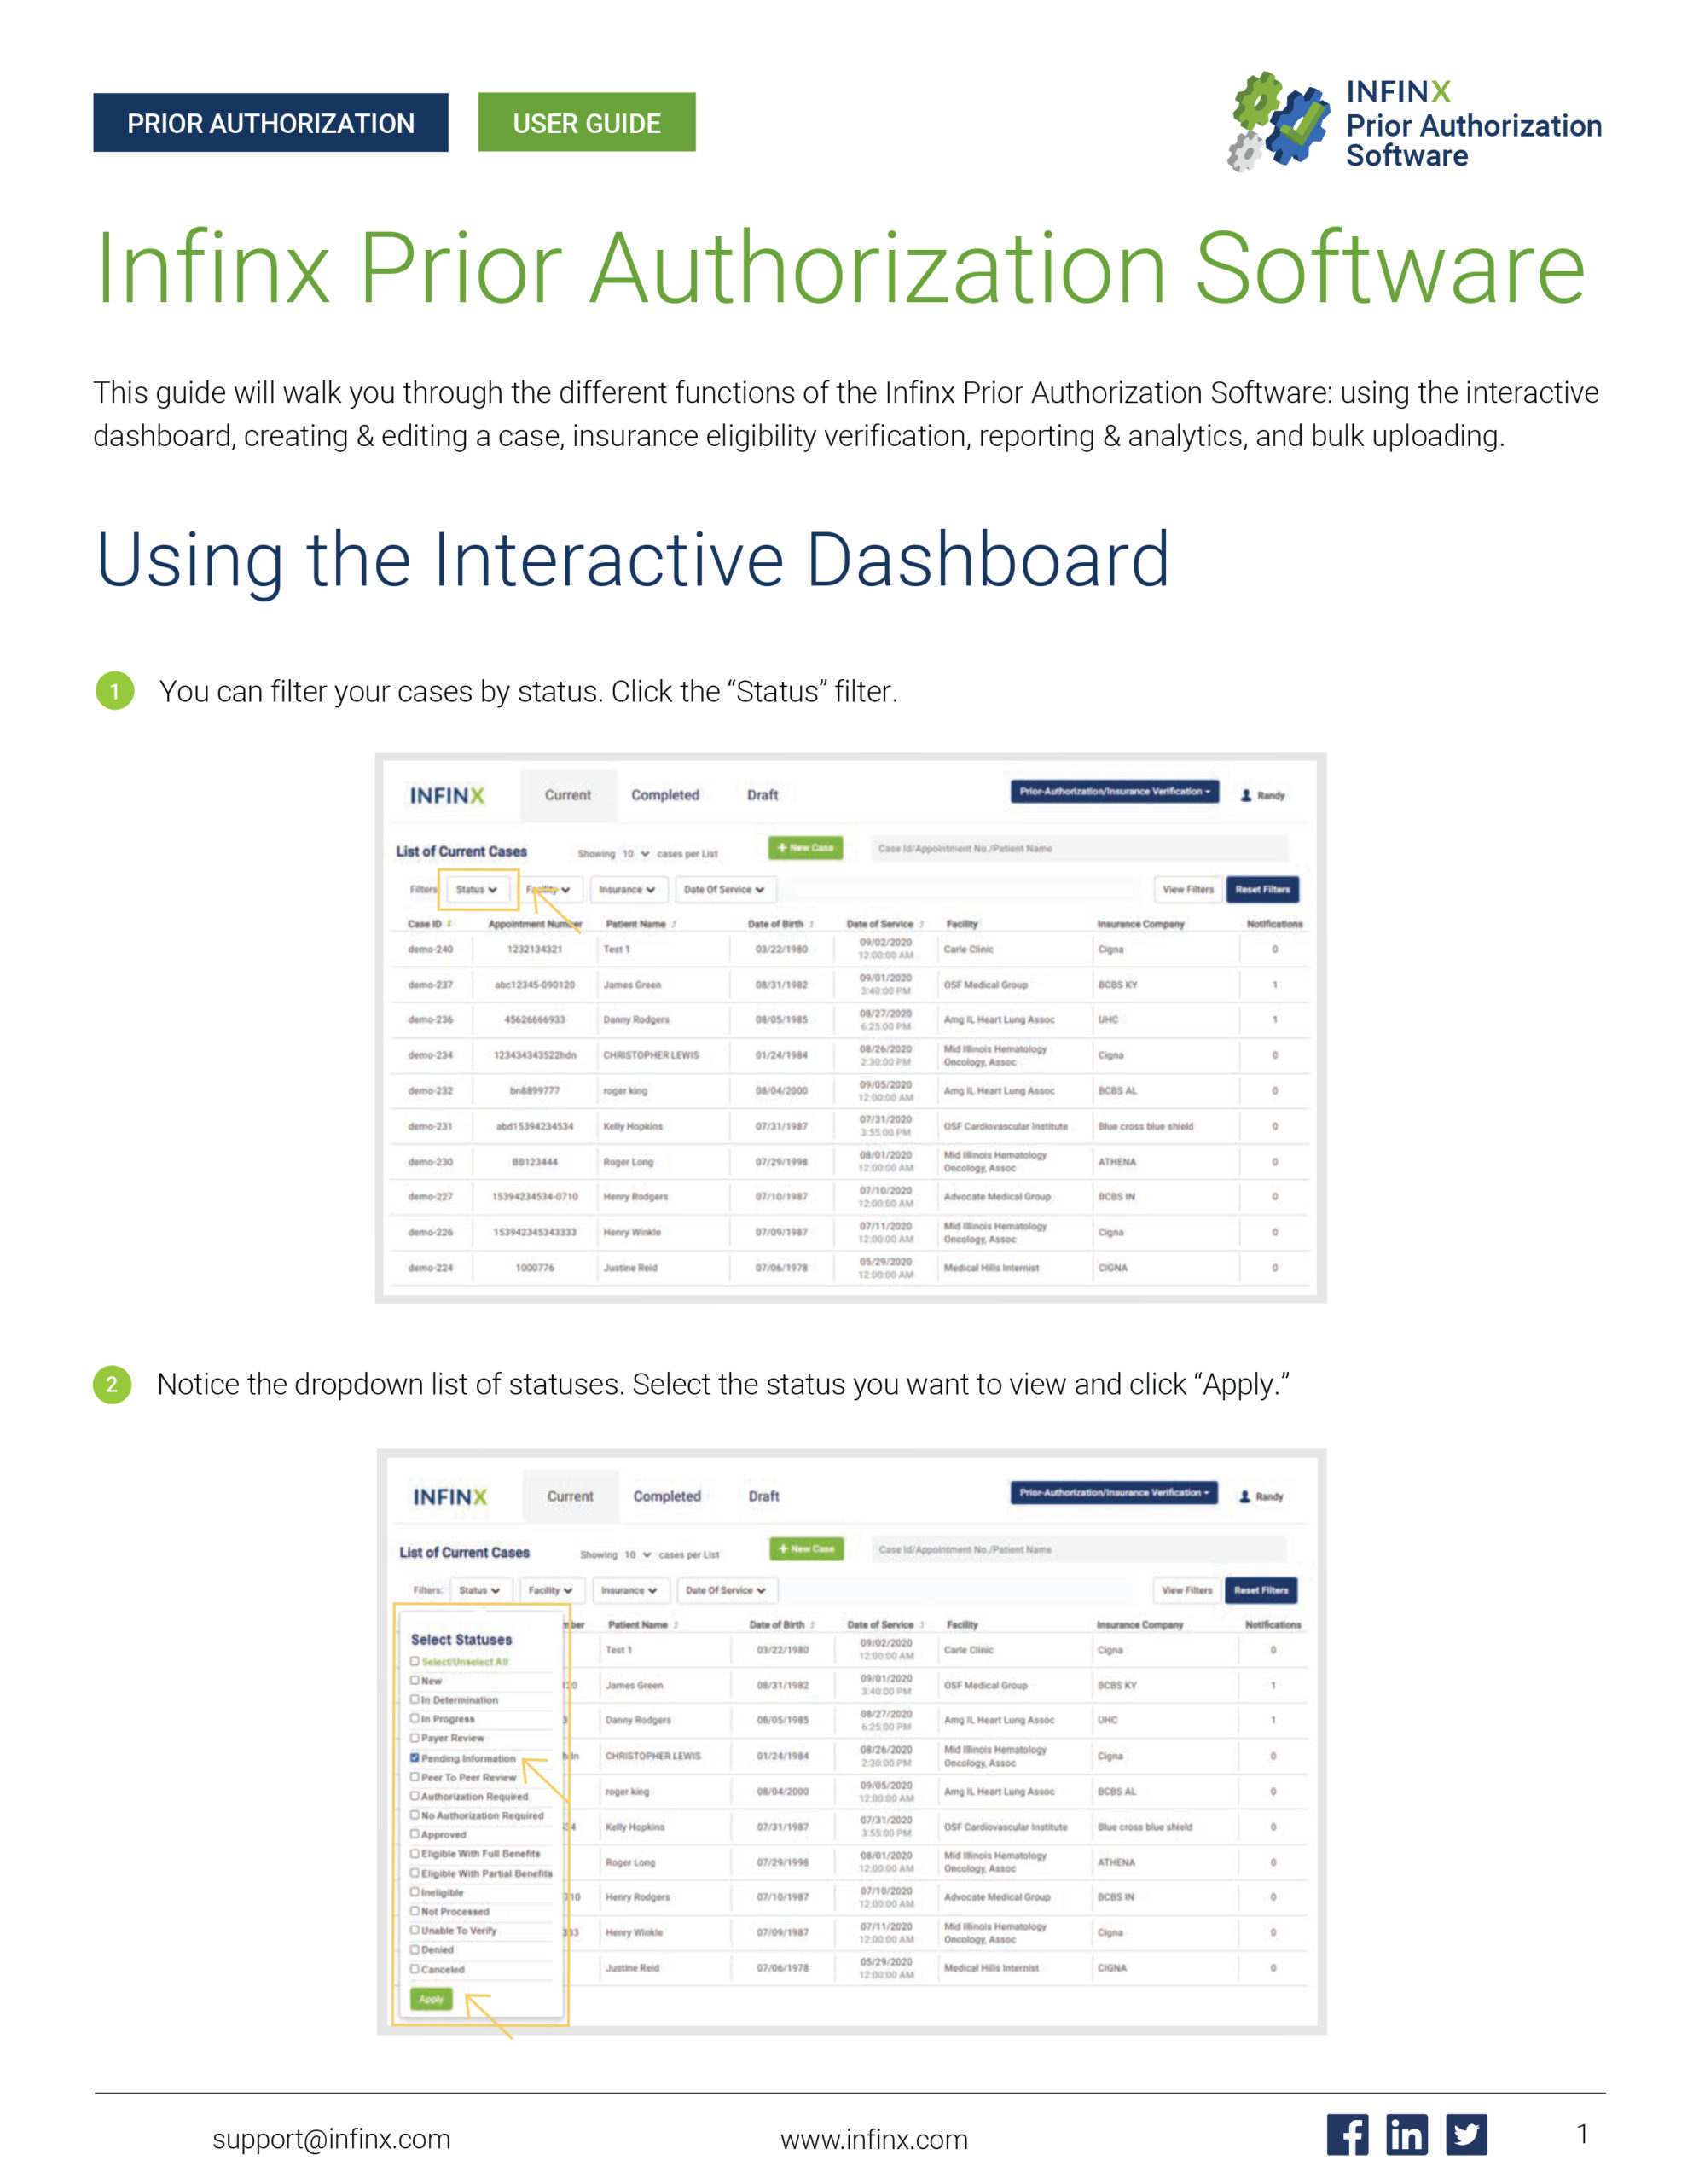 Infinx - User Manual - Prior Authorization Software Comprehensive User Guide - Dec2020 - 5